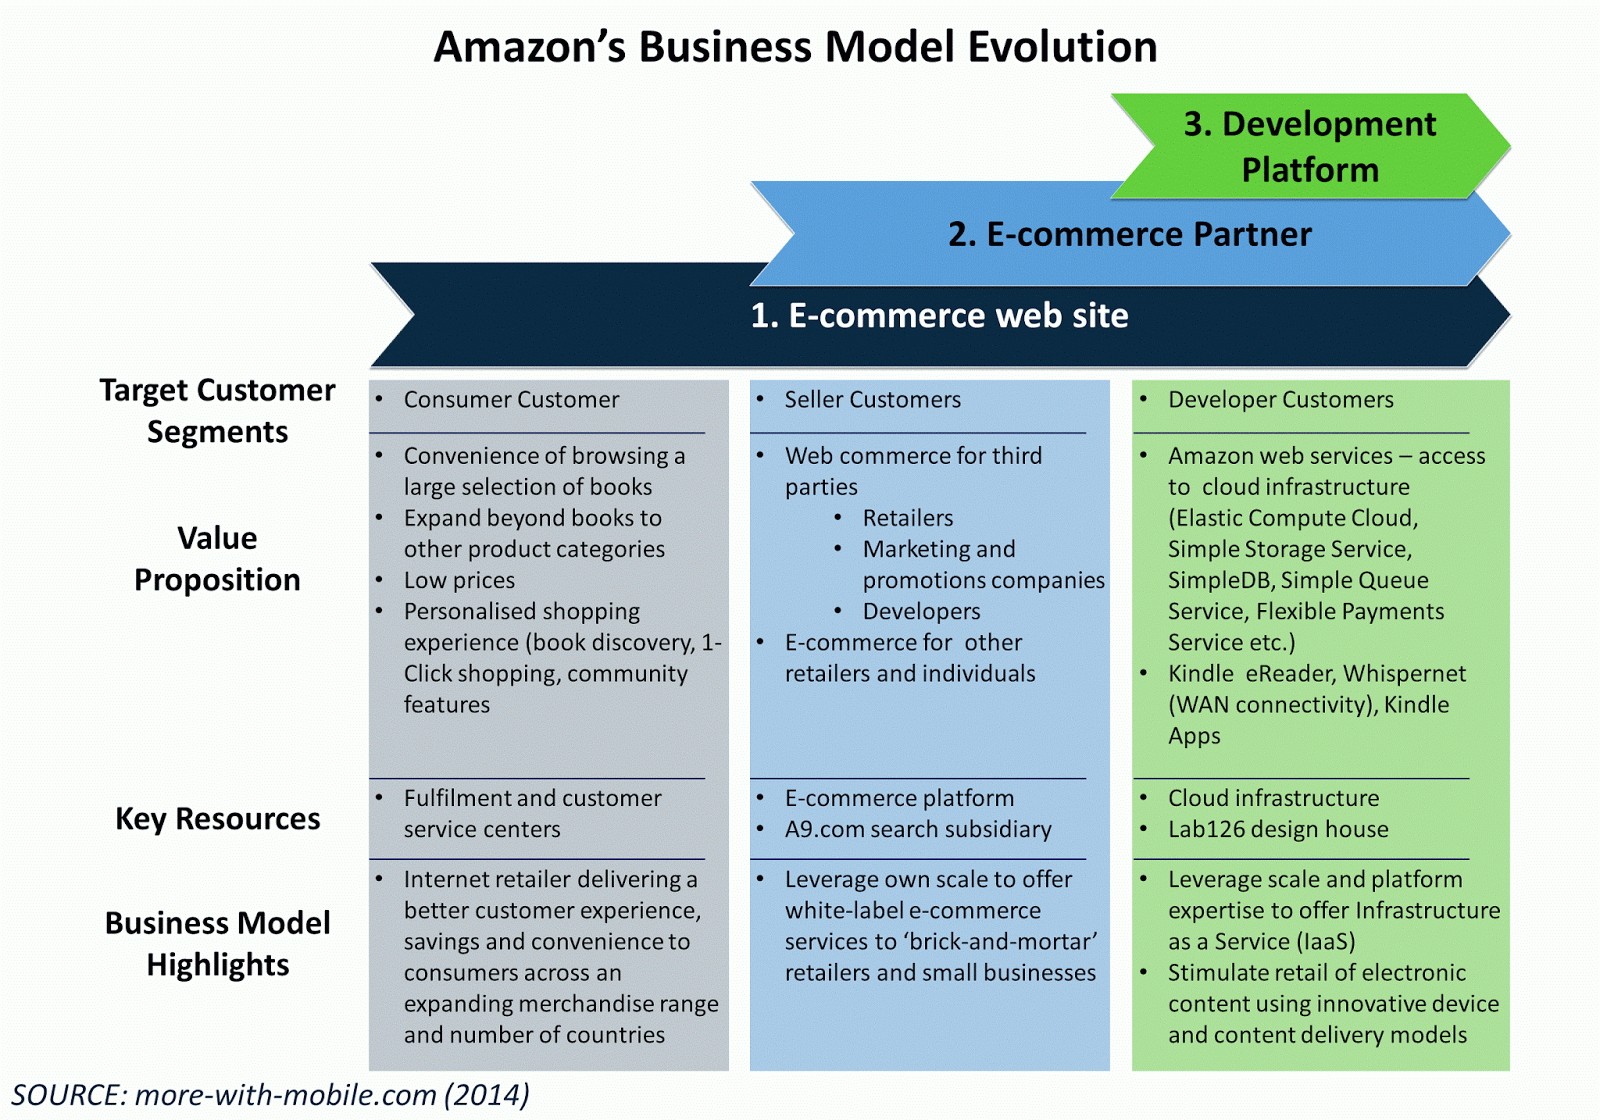 Business Strategy of Amazon